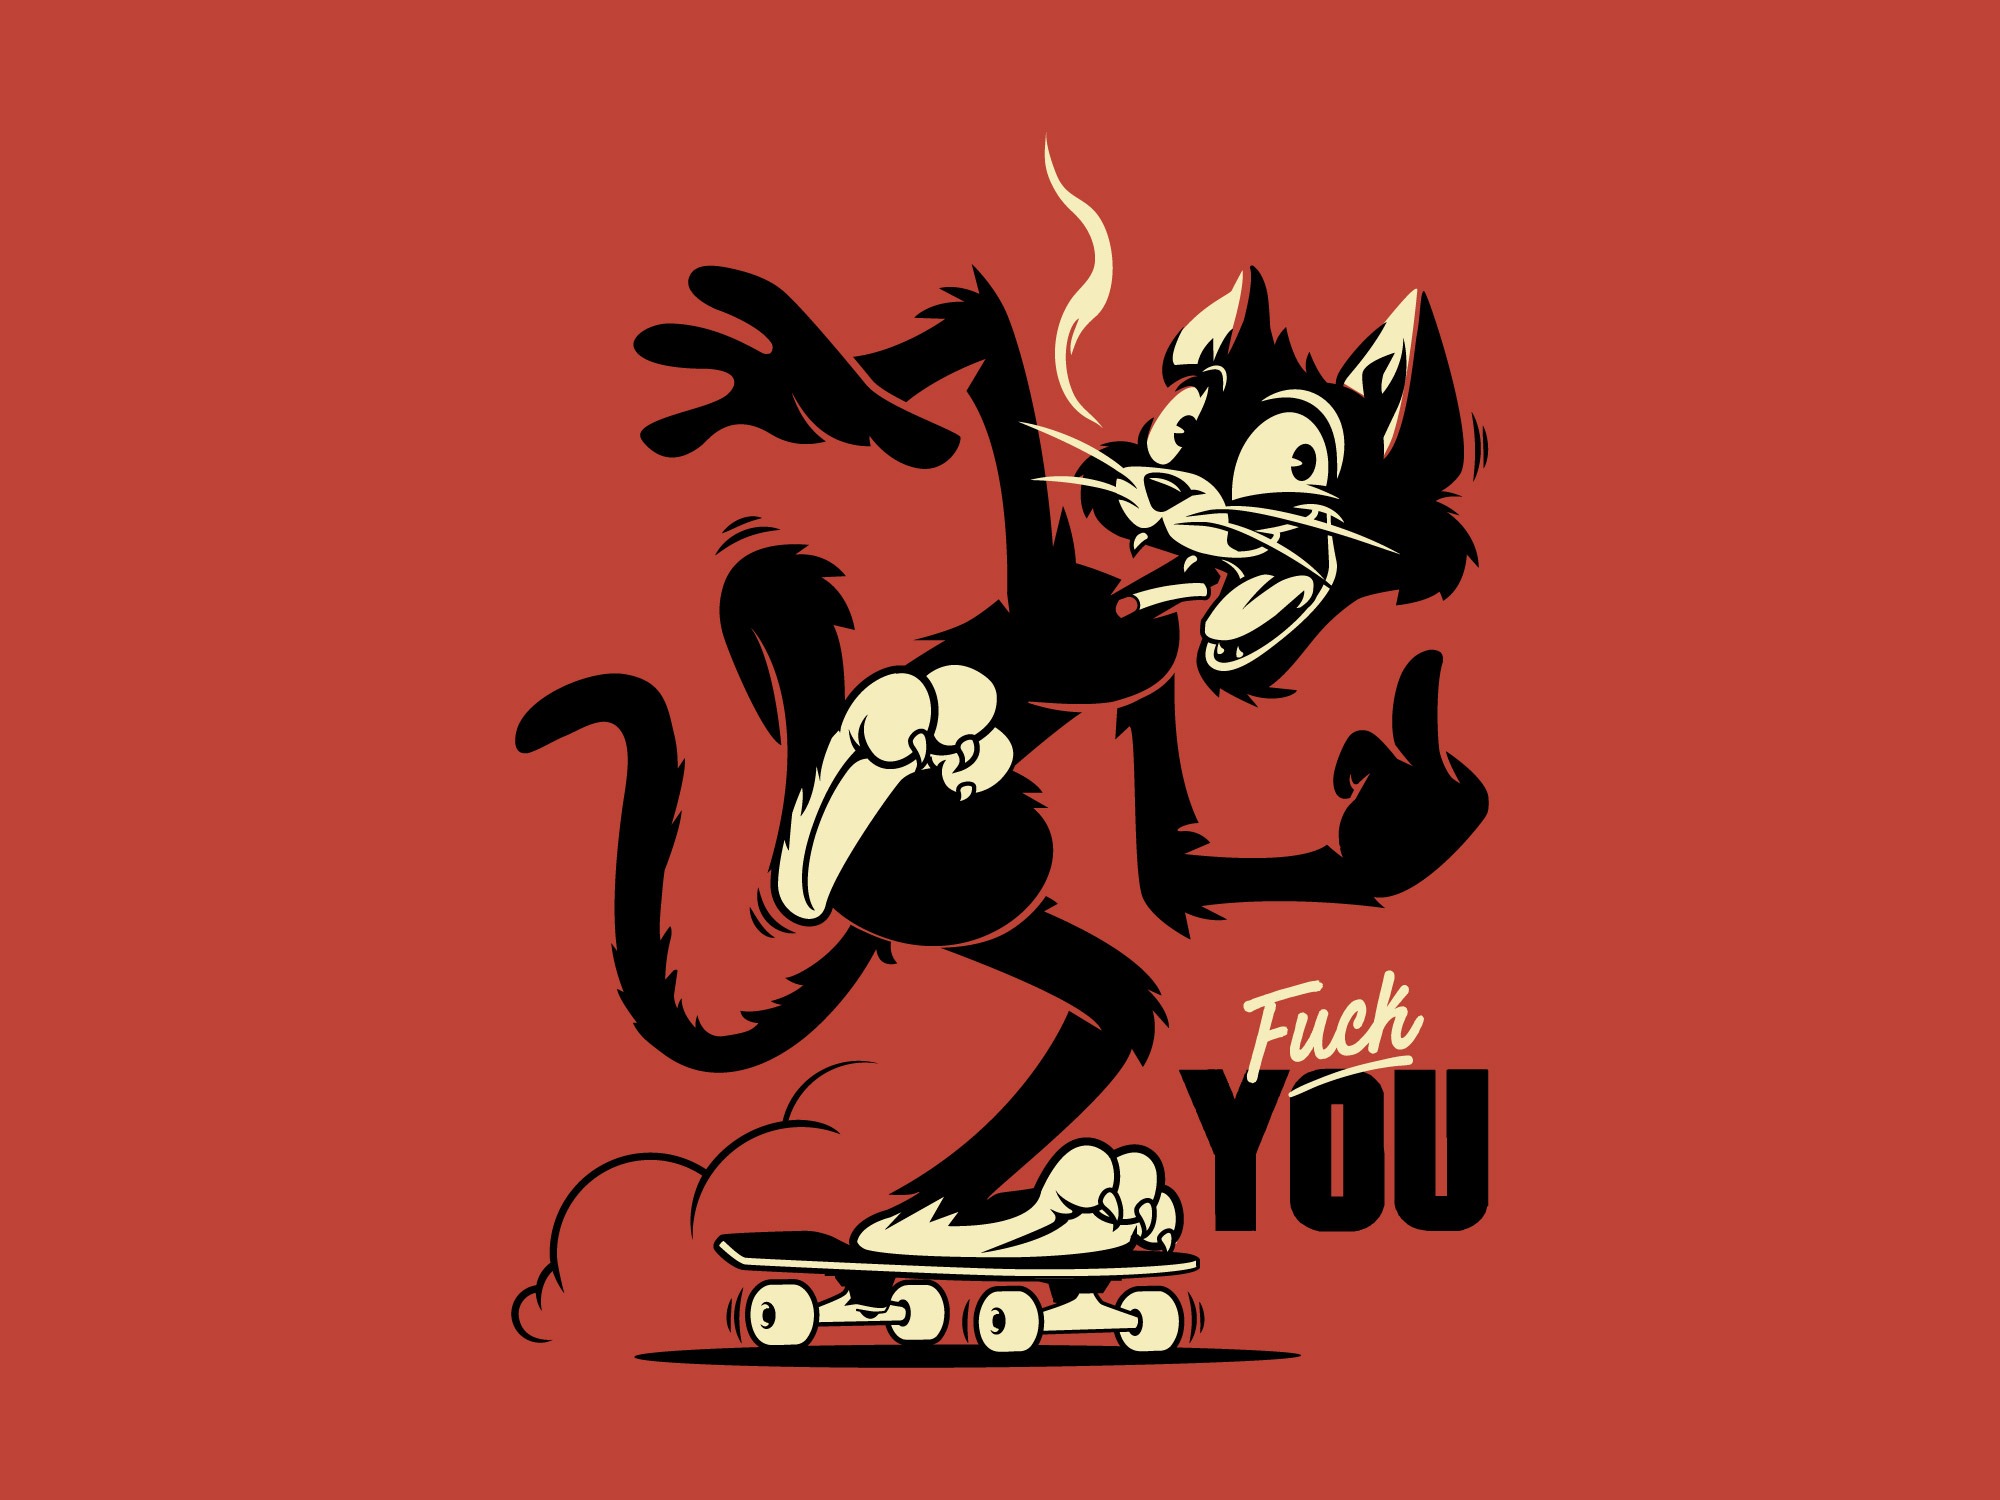 Fuck-you cat skateboarding